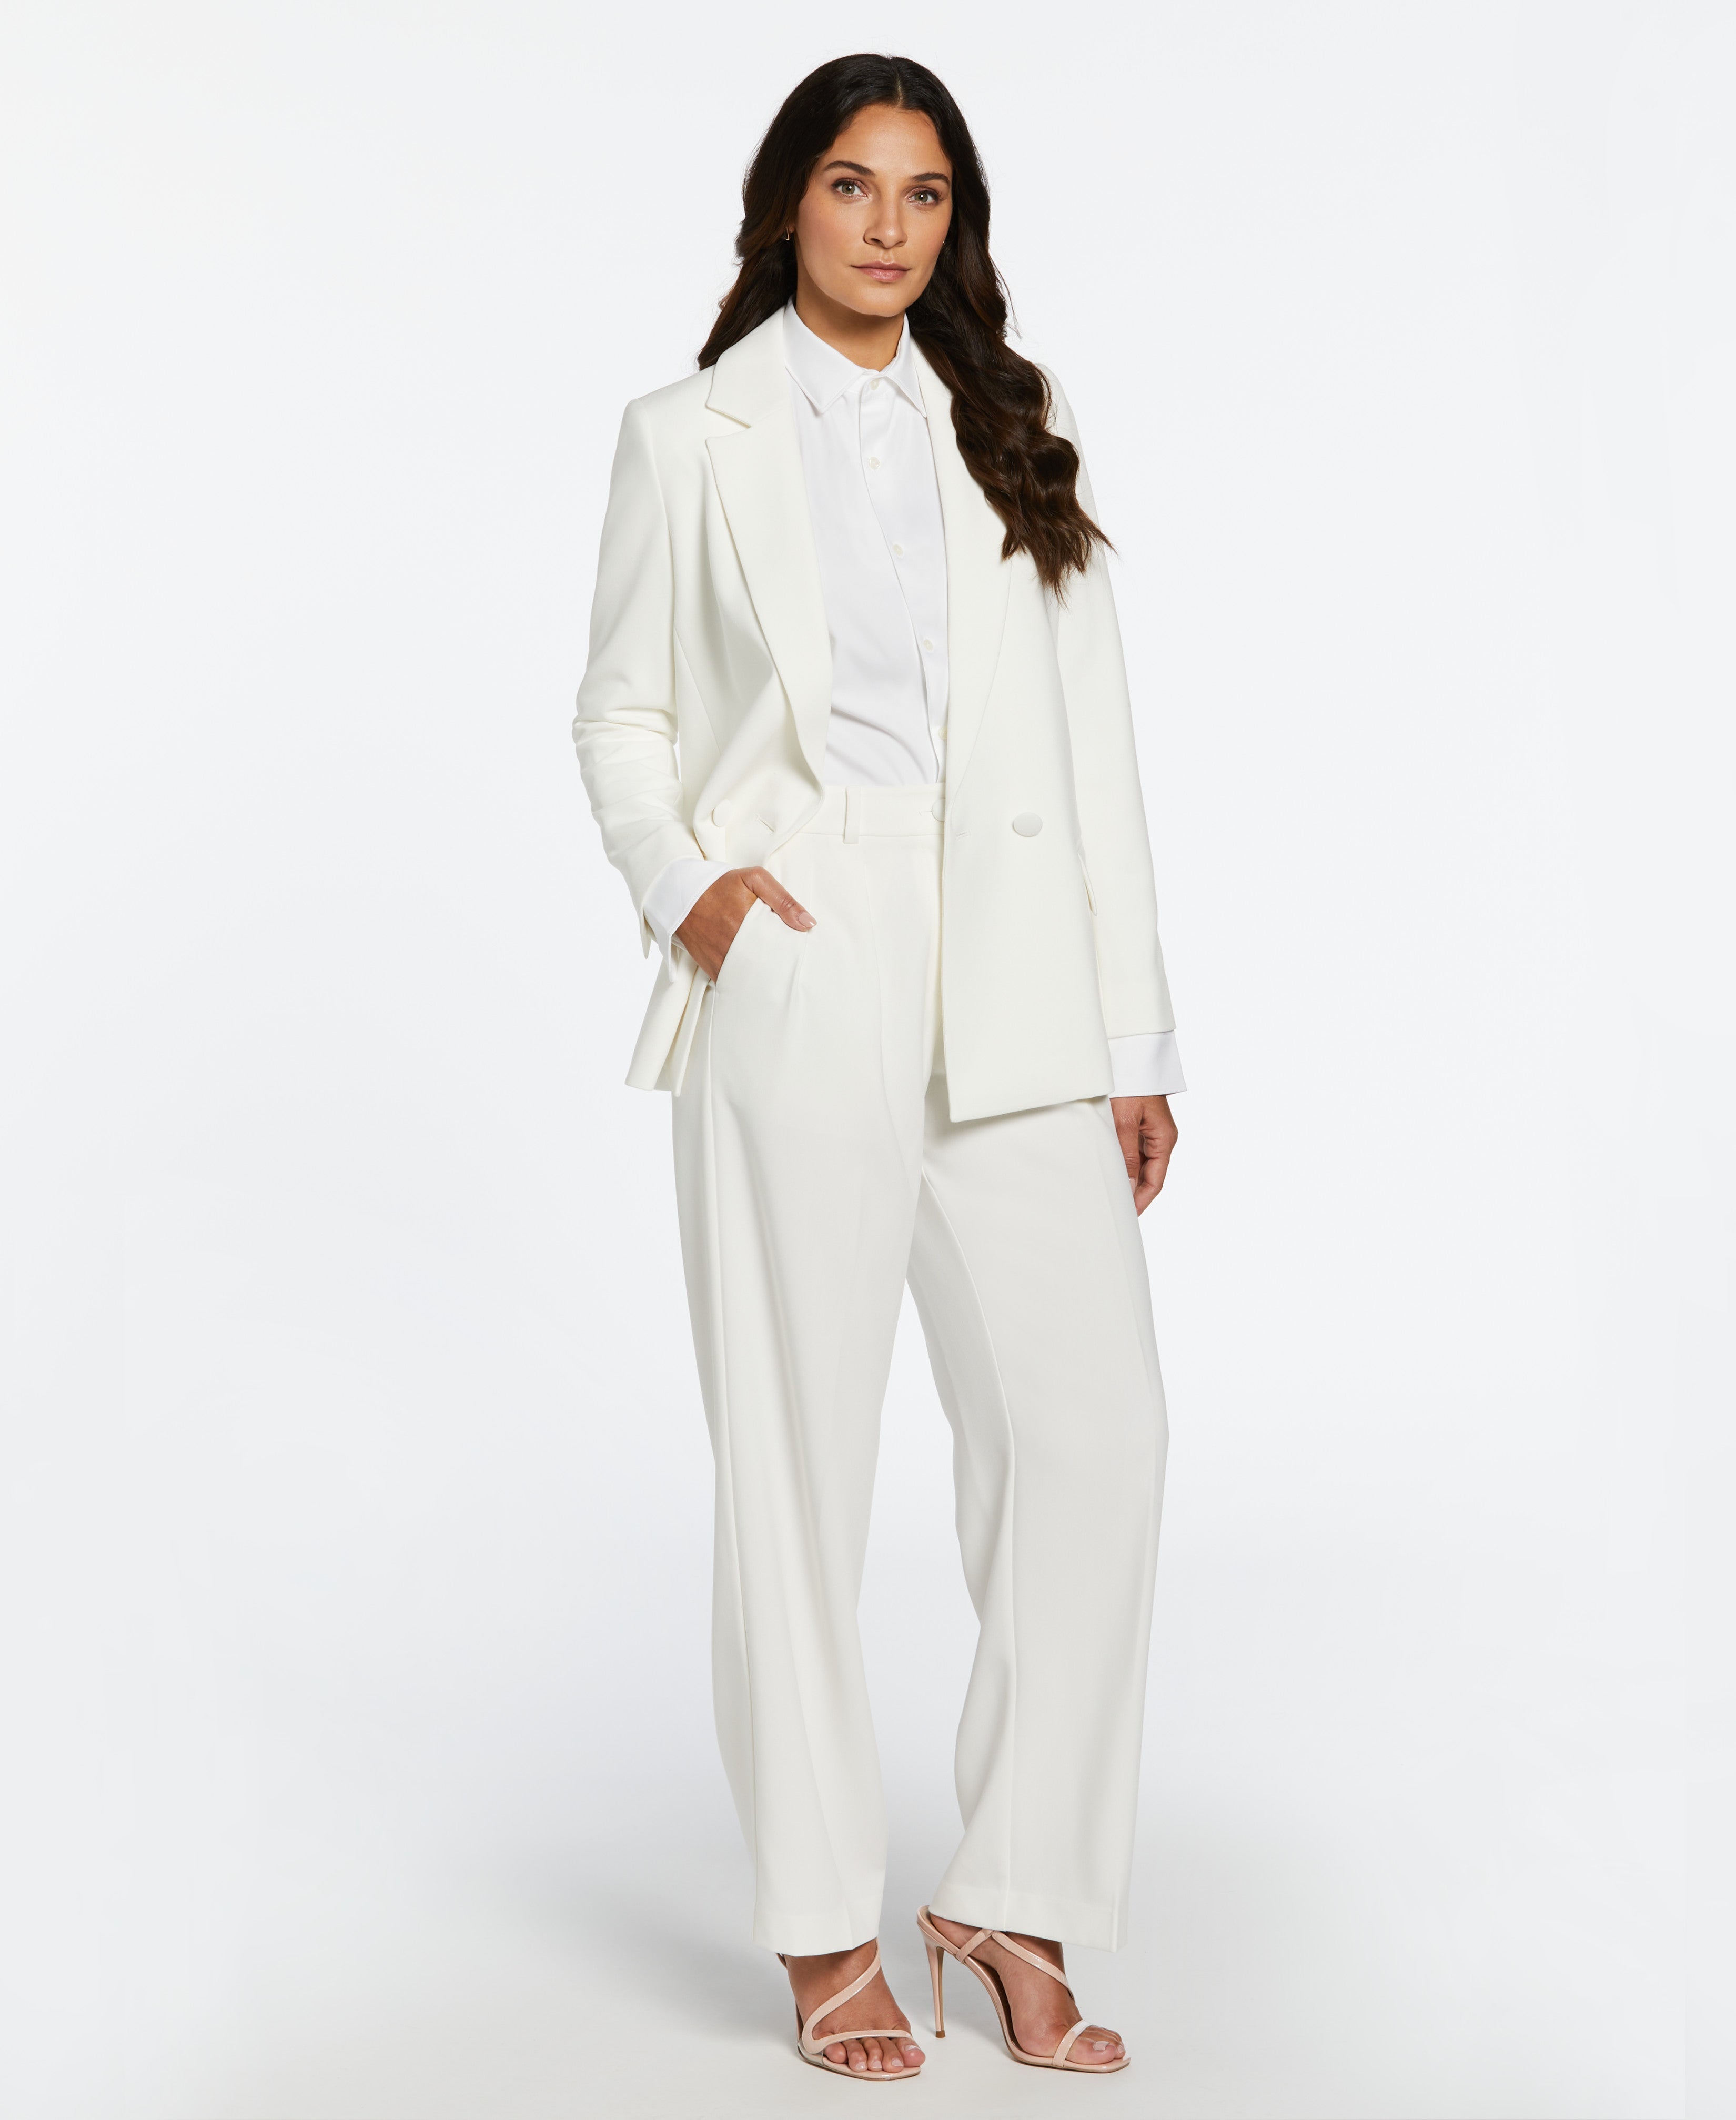 Rafaella Business Pant Suits for Women